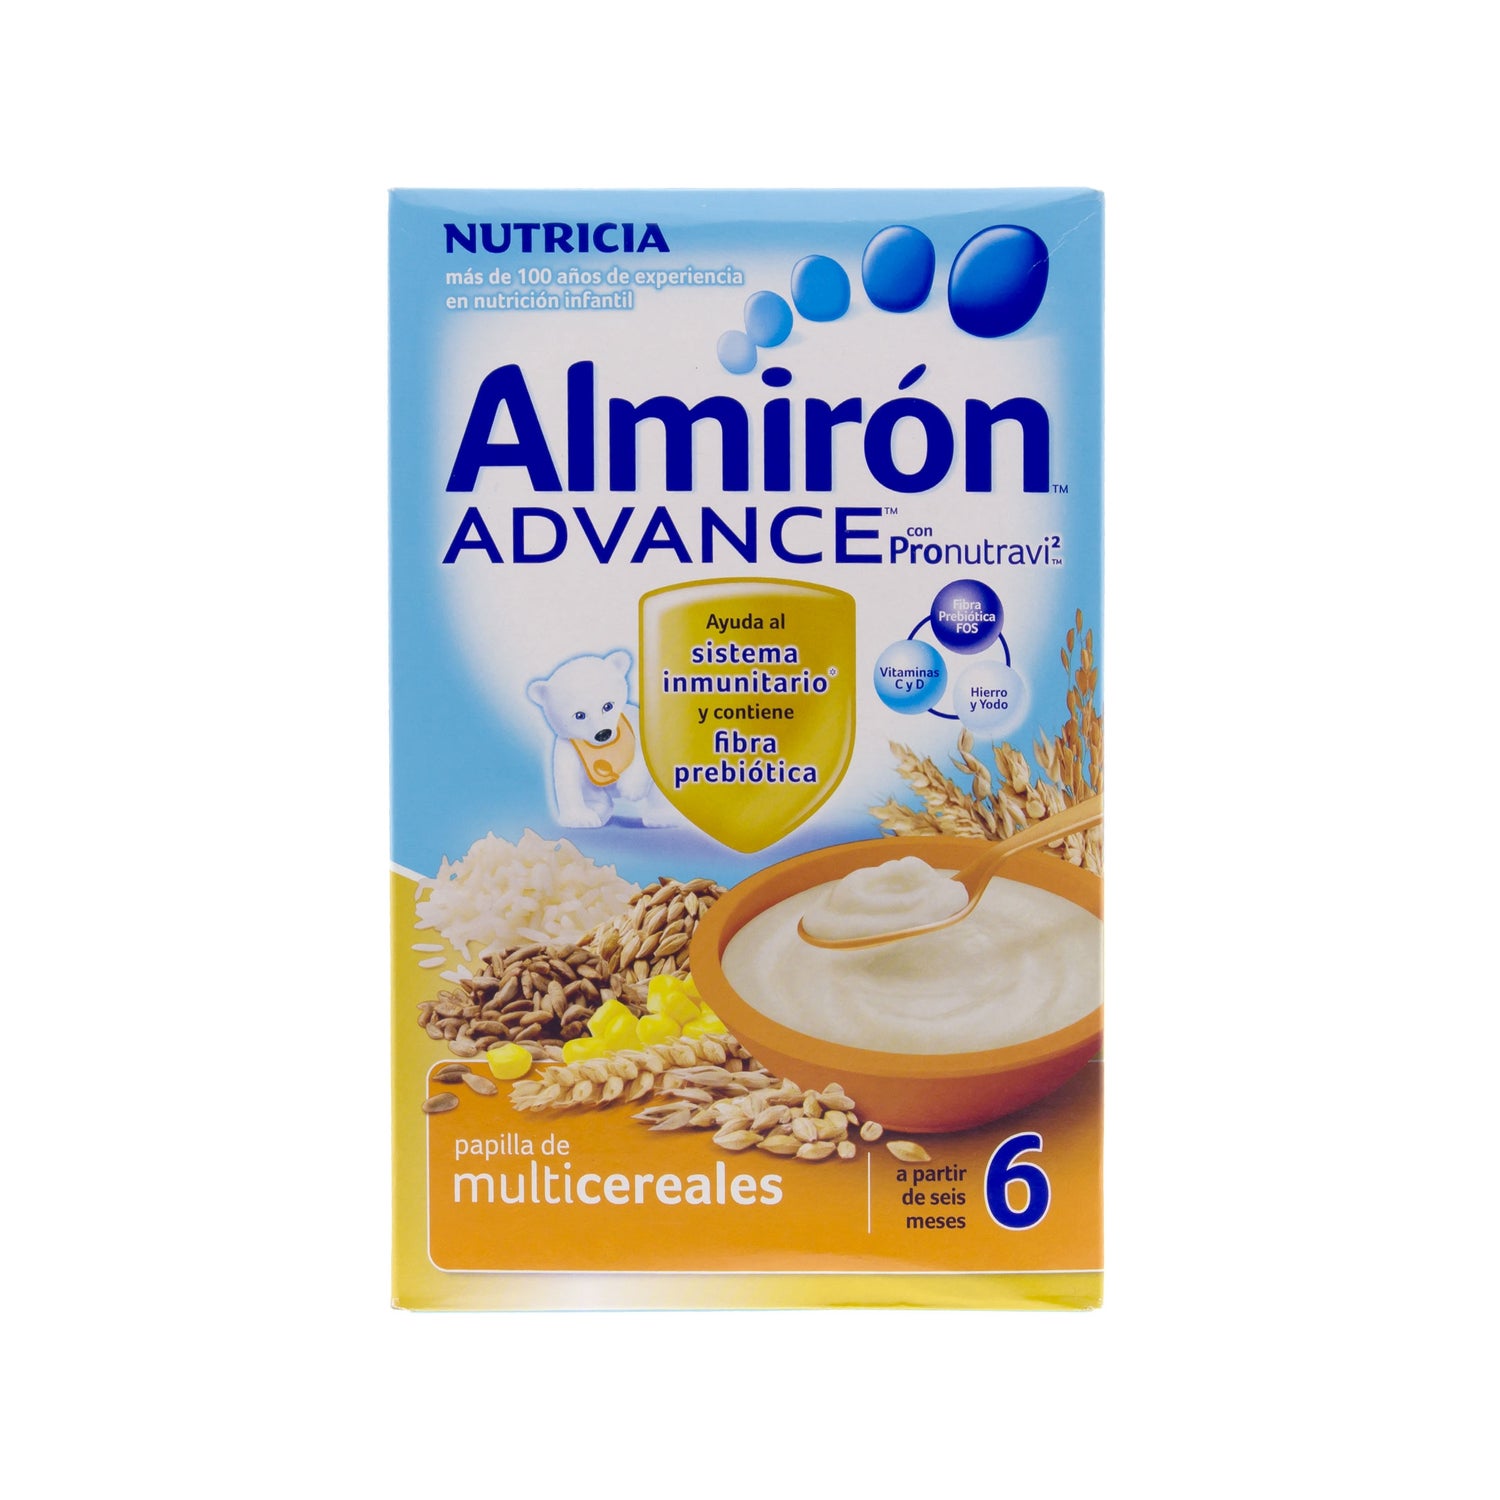 Almirón Advance Pronutra 3 2x800g